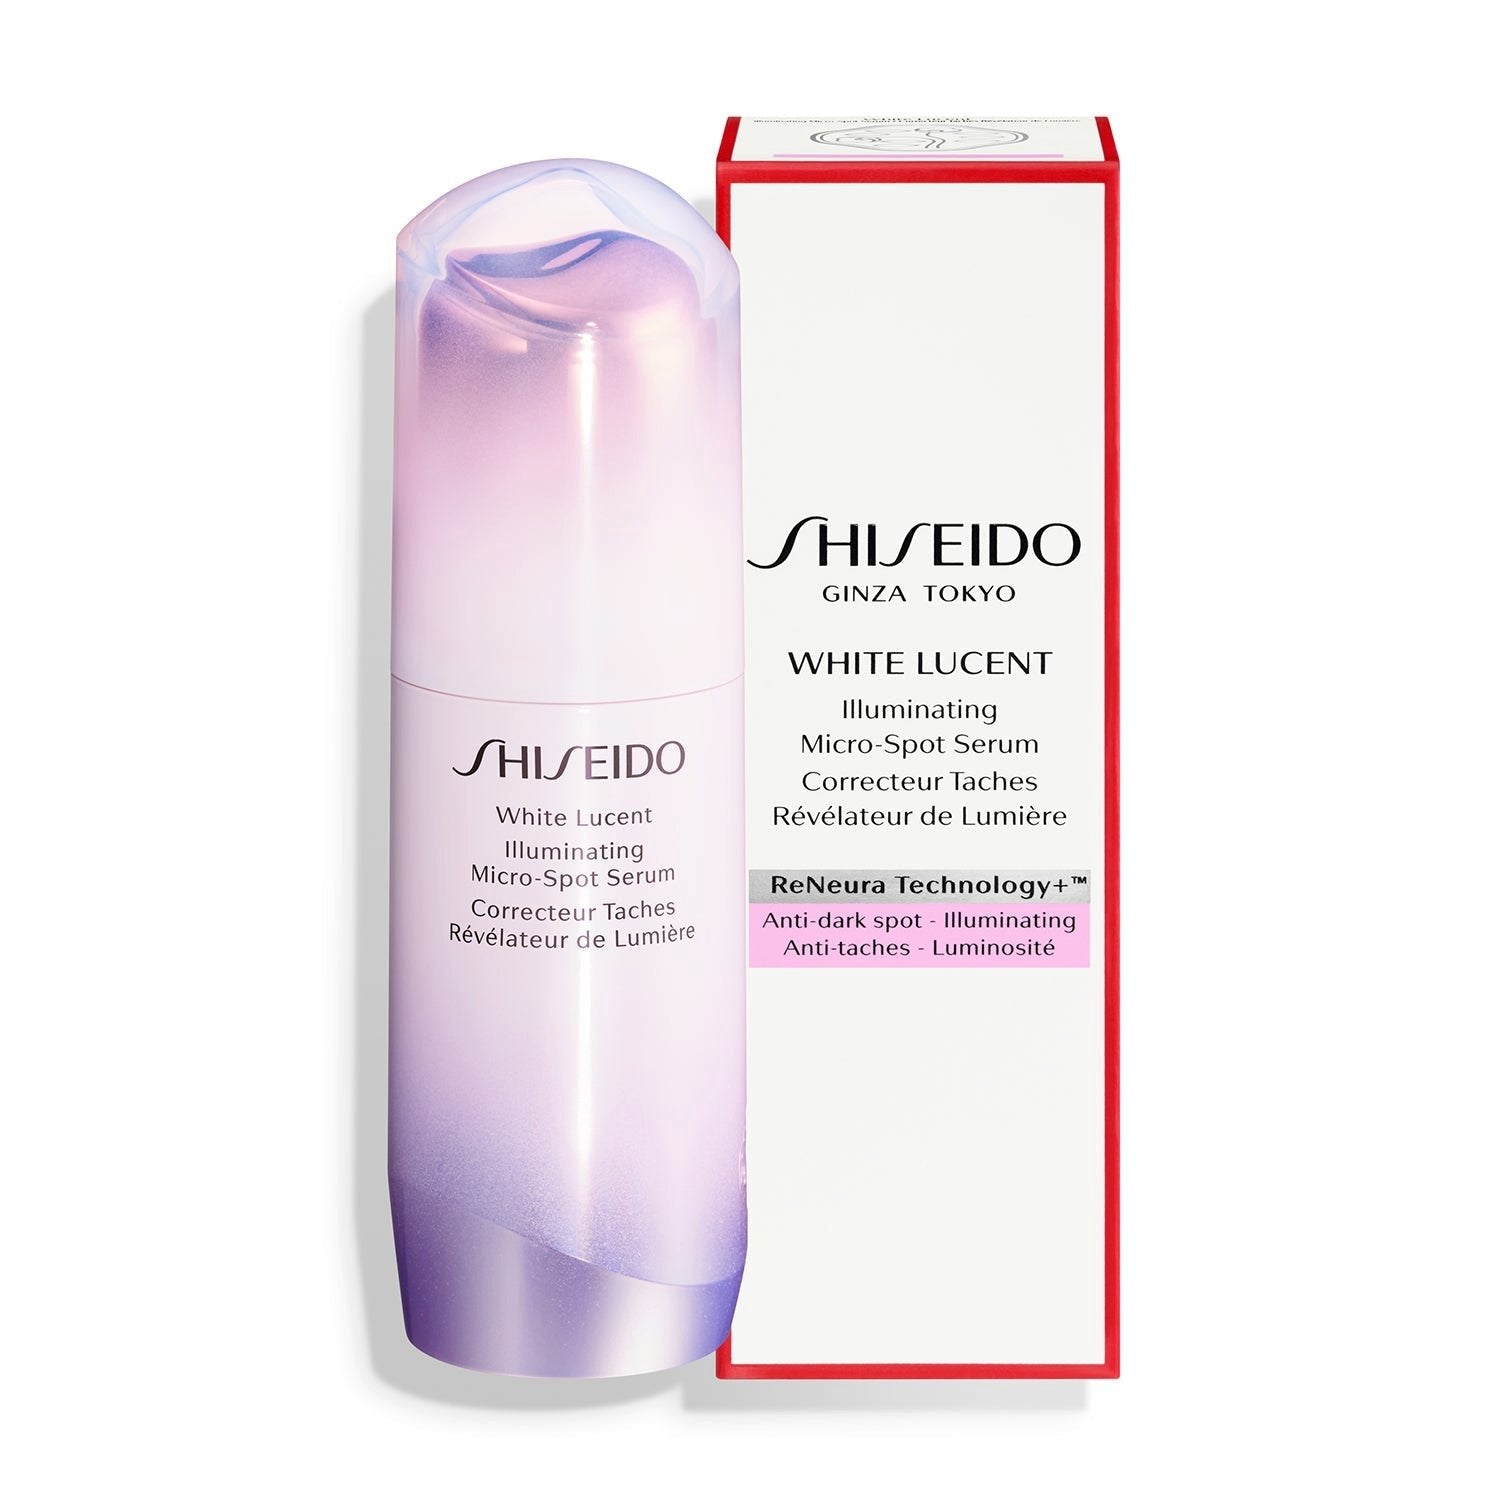 P-1-SHIS-LUCESS-30-Shiseido White Lucent Illuminating Micro Spot Serum Skin Whitening Essence 30ml.jpg